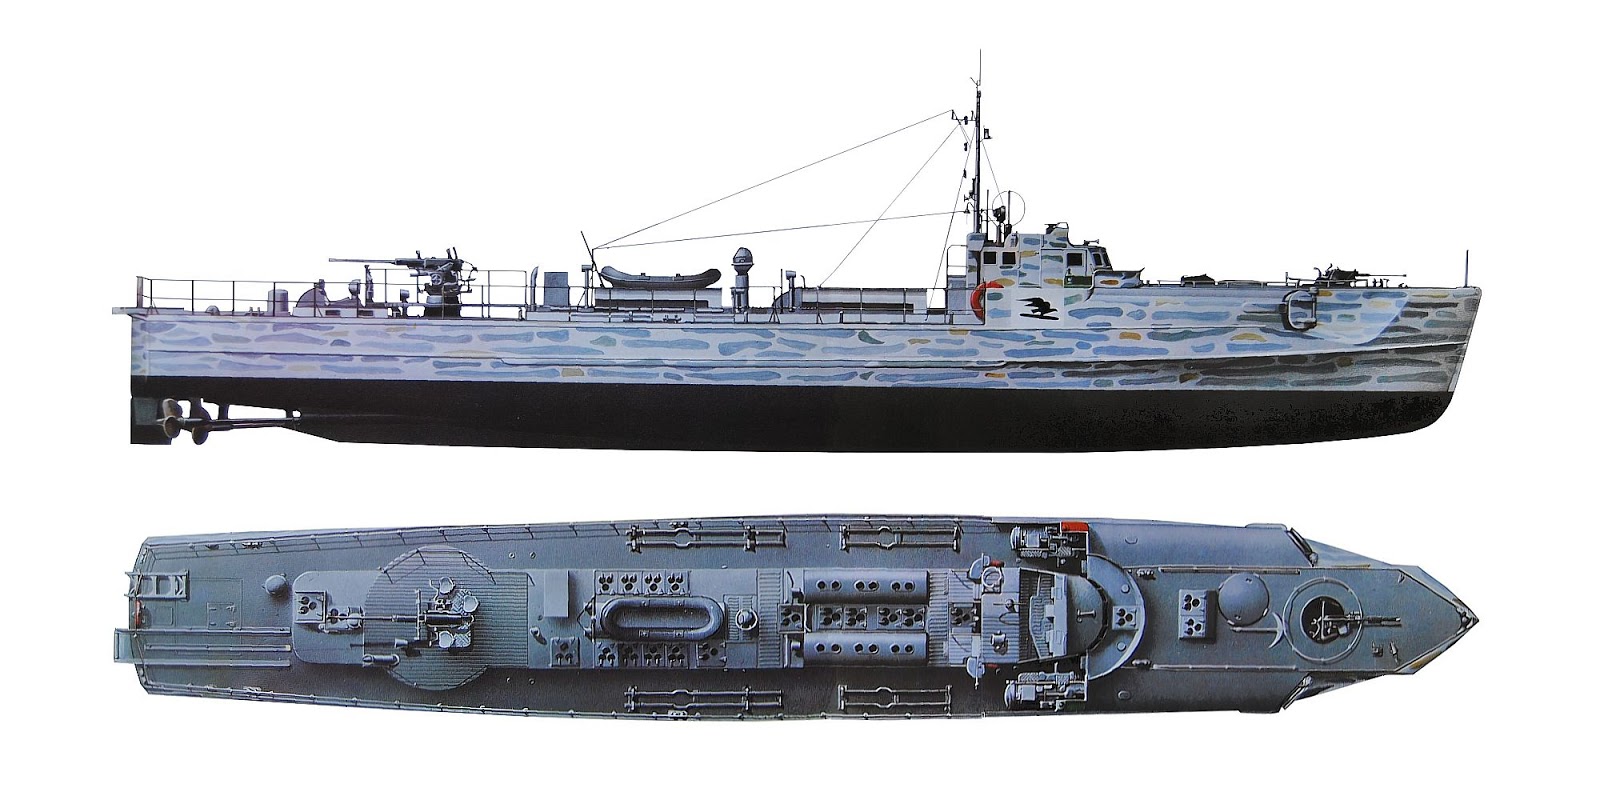 Kriegsmarine: The Forgotten Service: E-Boat [S-boot]